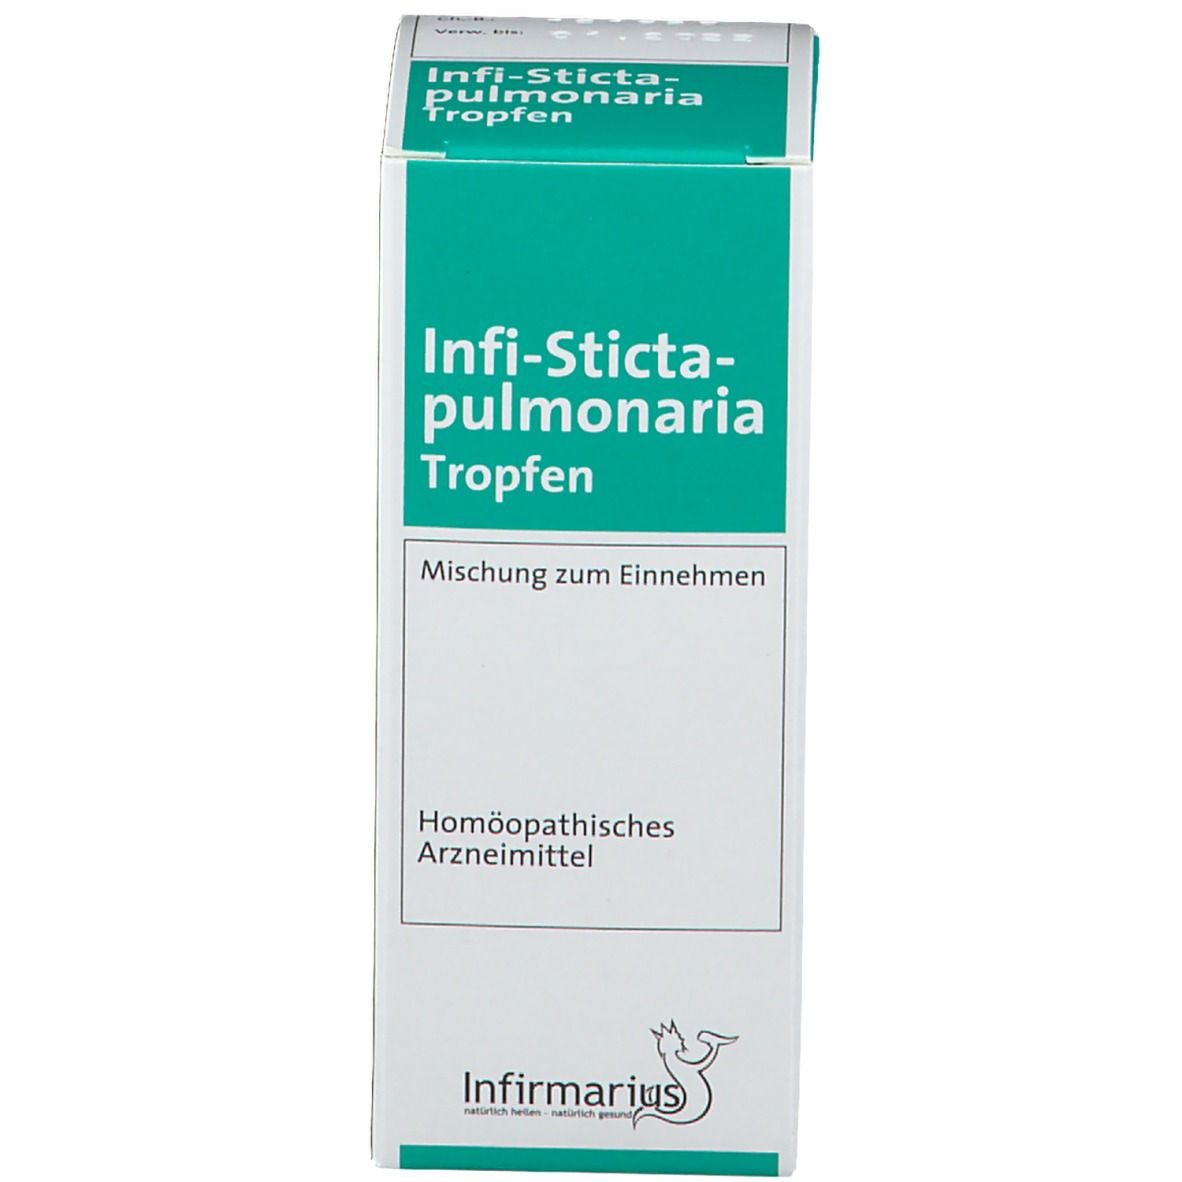 Infi-Sticta-pulmonaria Tropfen